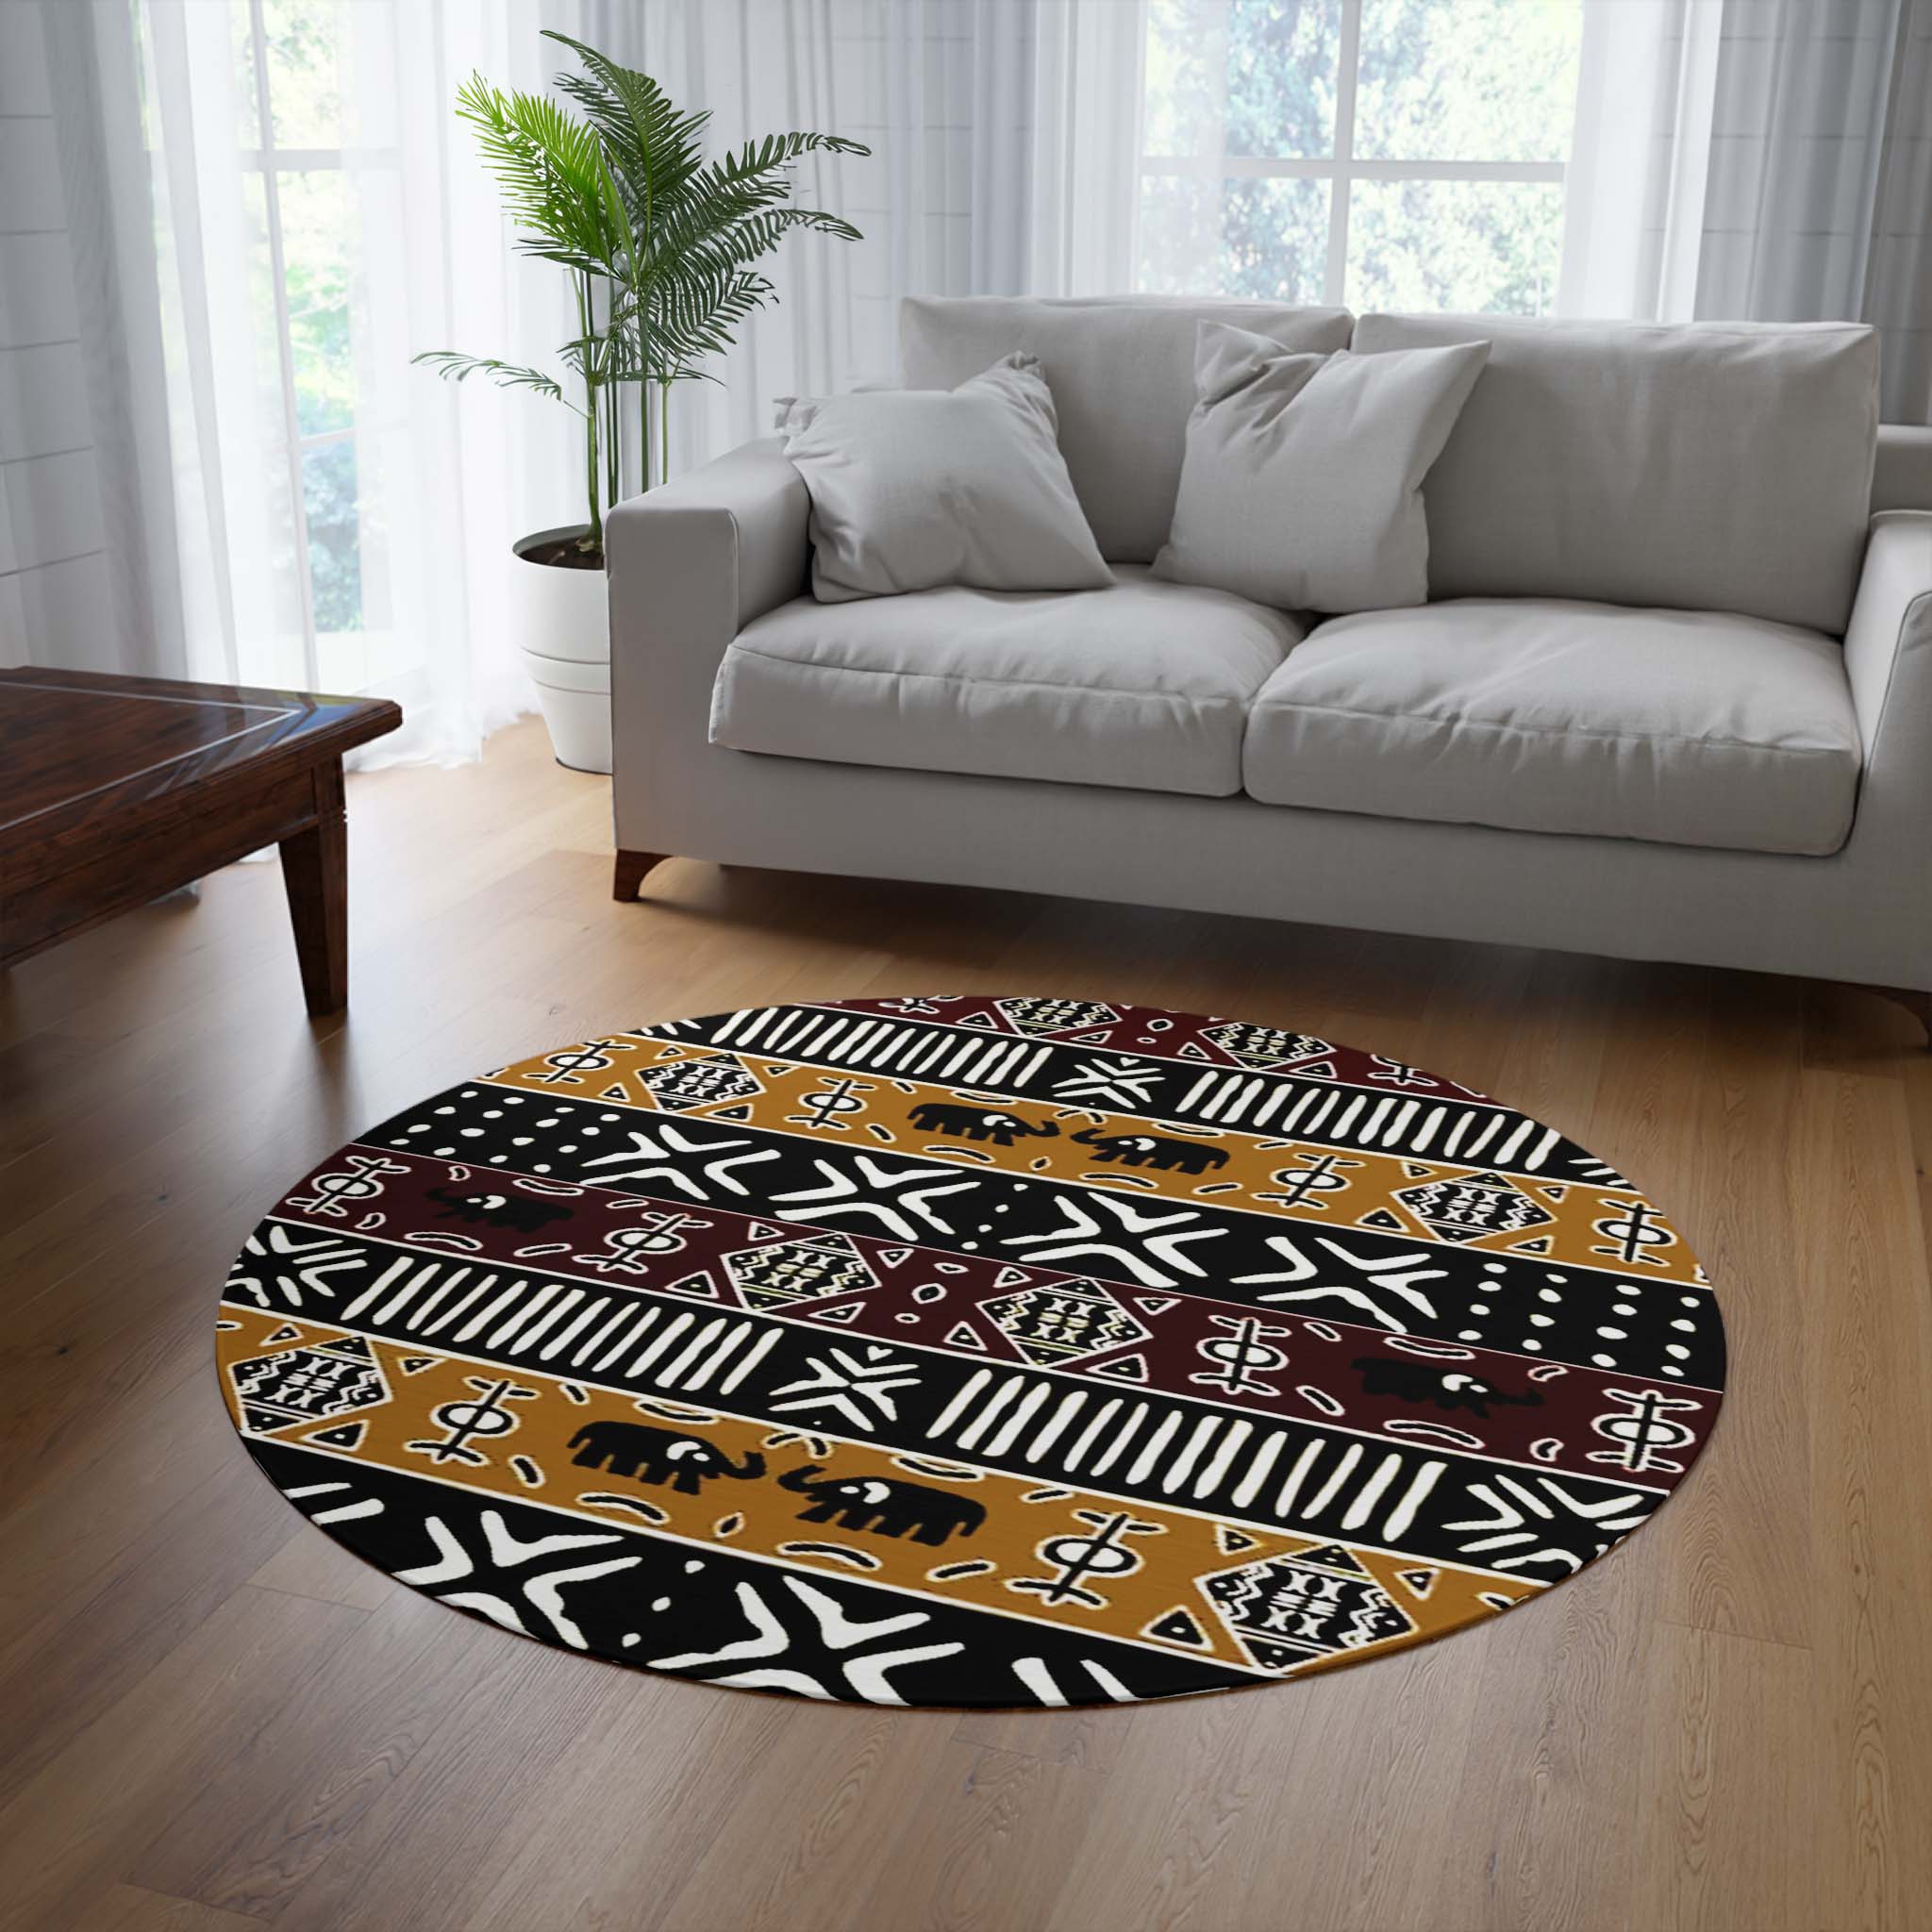 Ethnic Round Rug African Mudcloth Carpet - Bynelo